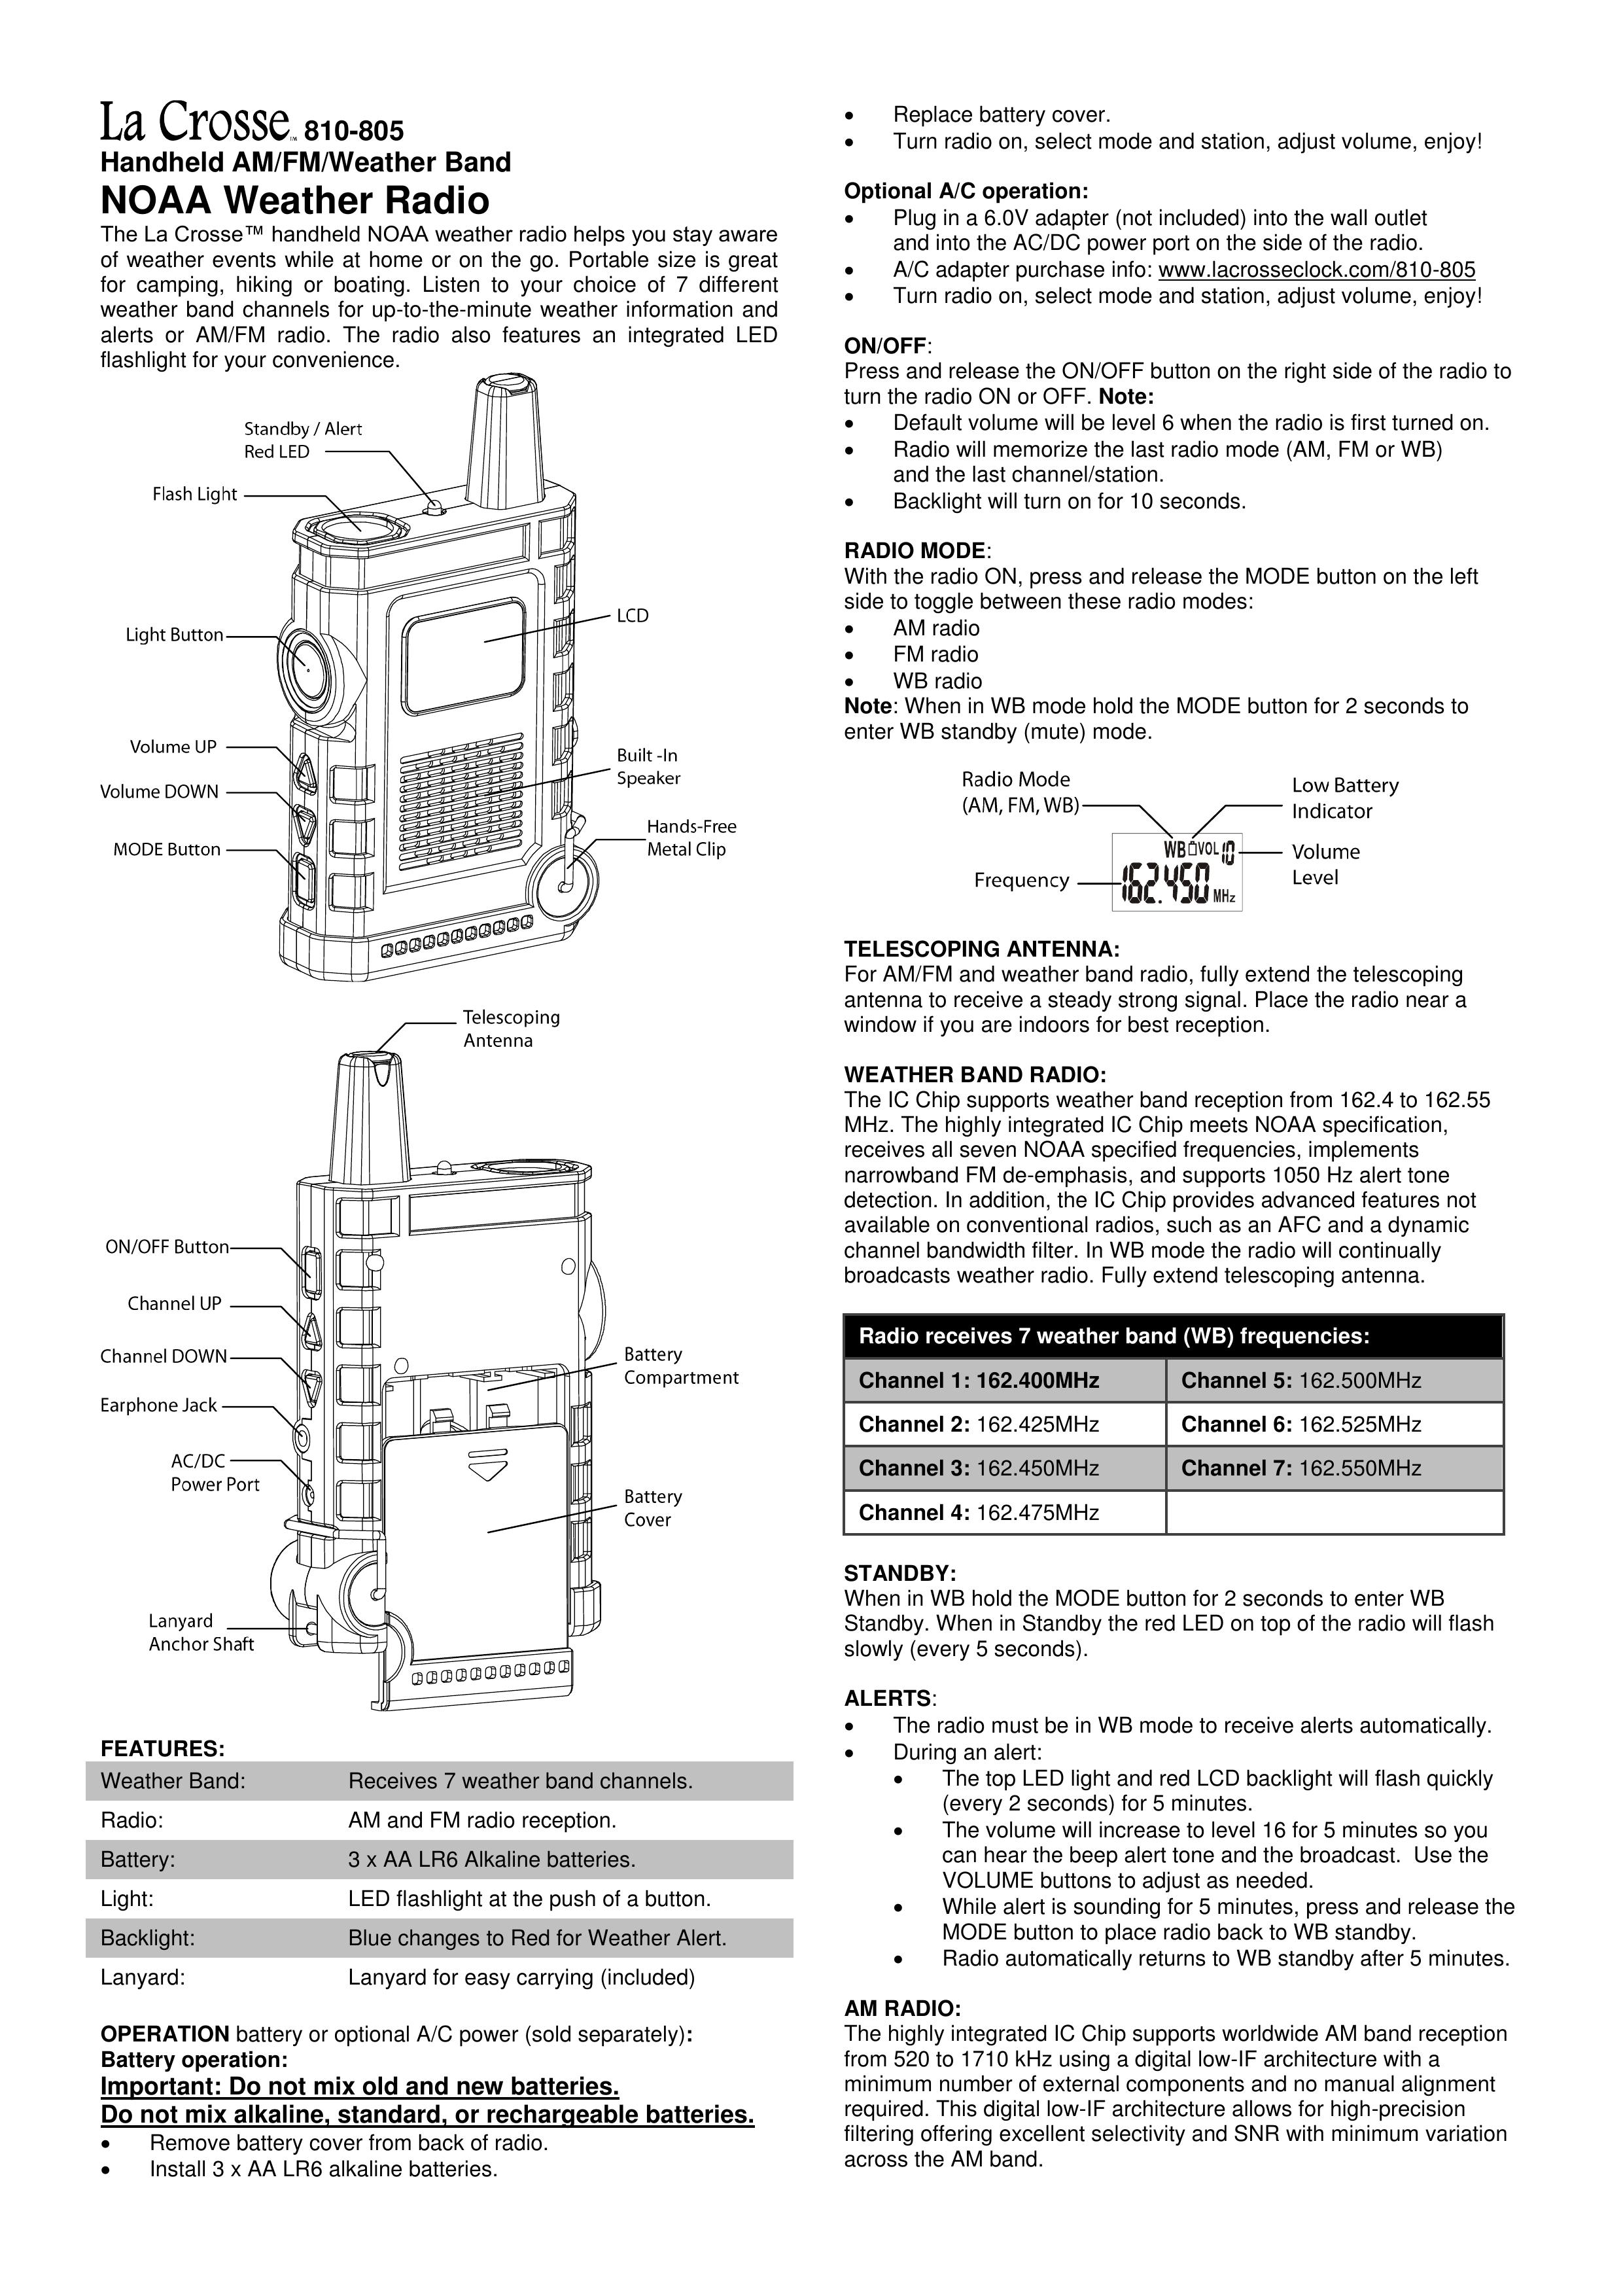 La Crosse Technology 810-805 Marine Radio User Manual